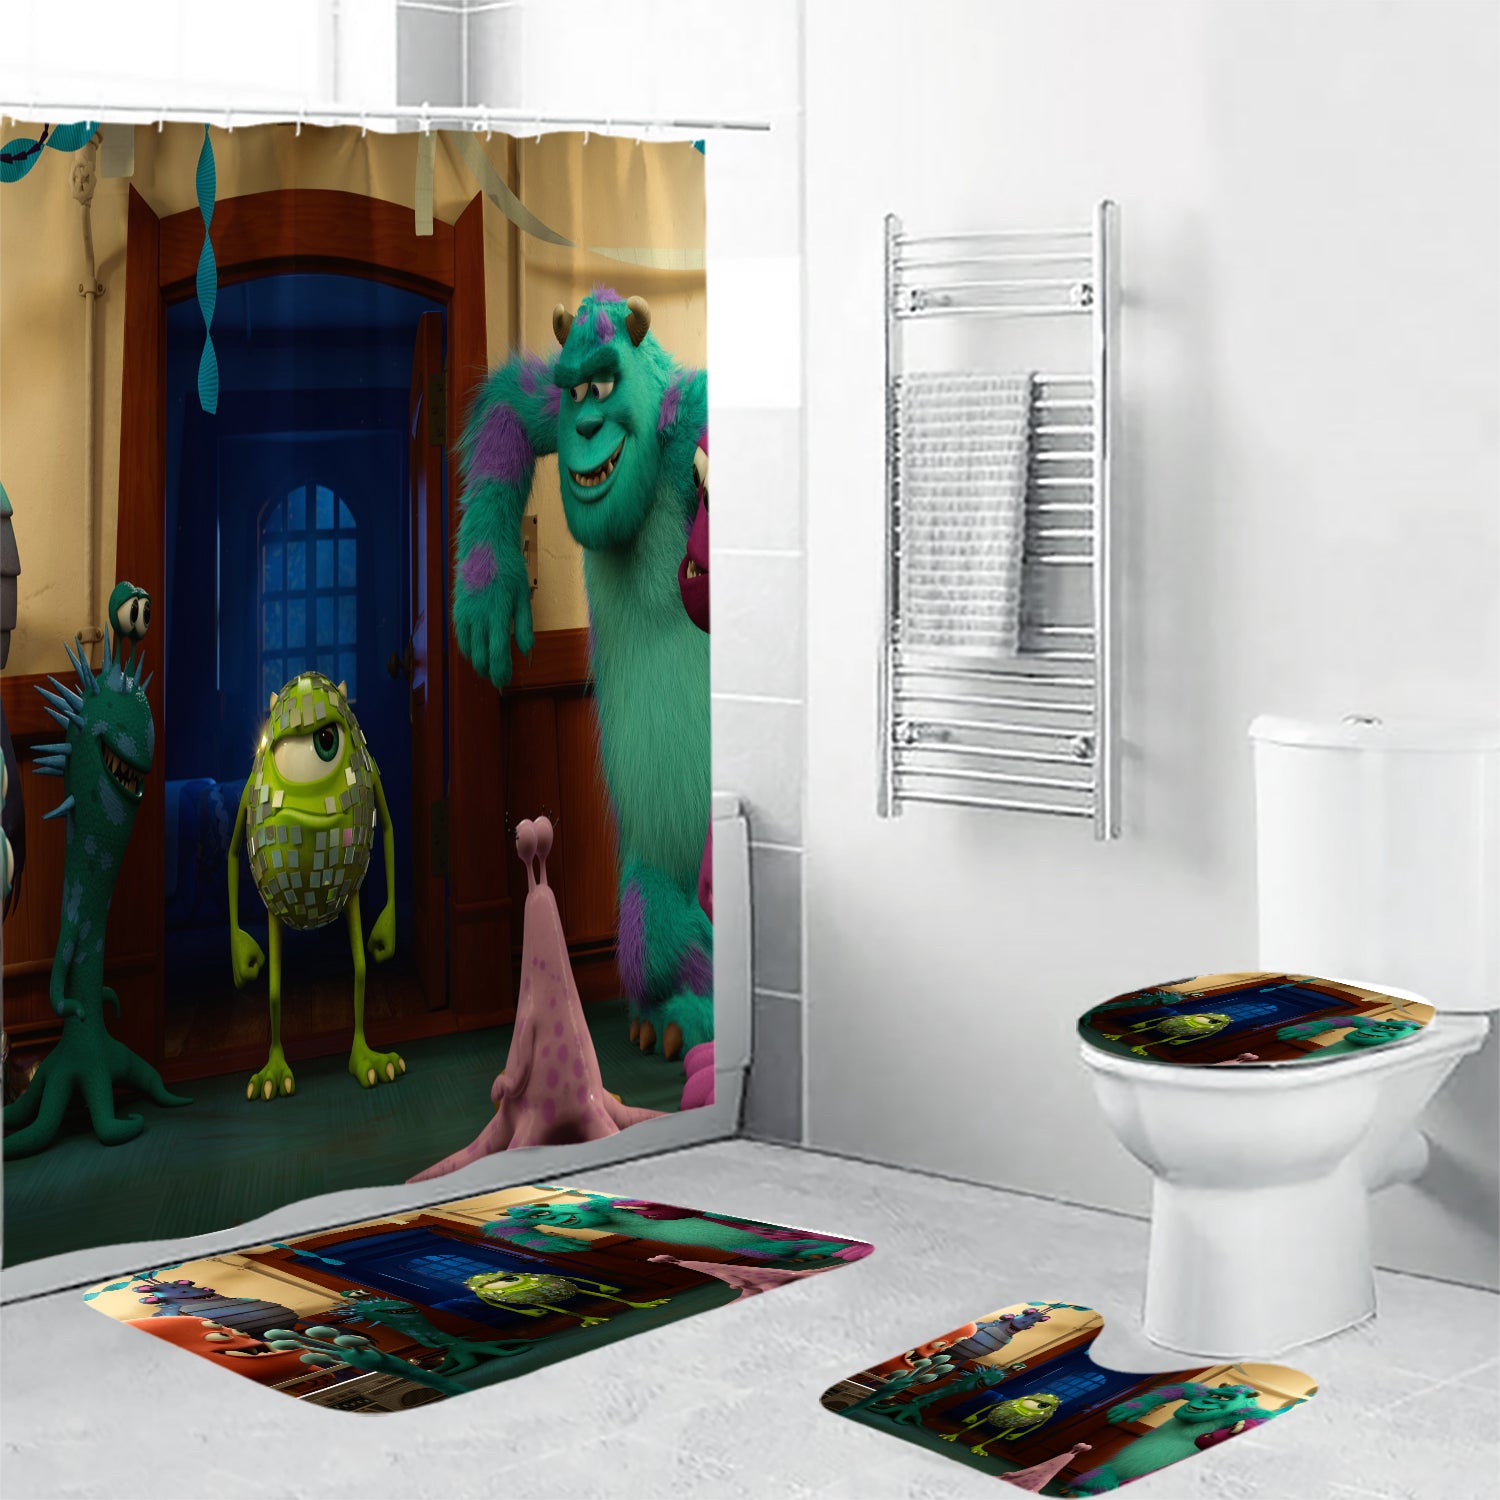 Characters v14 Monsters Inc Monsters University Movie Disney Pixar Waterproof Shower Curtain Non-Slip Toilet Lid Cover Bath Mat - Bathroom Set